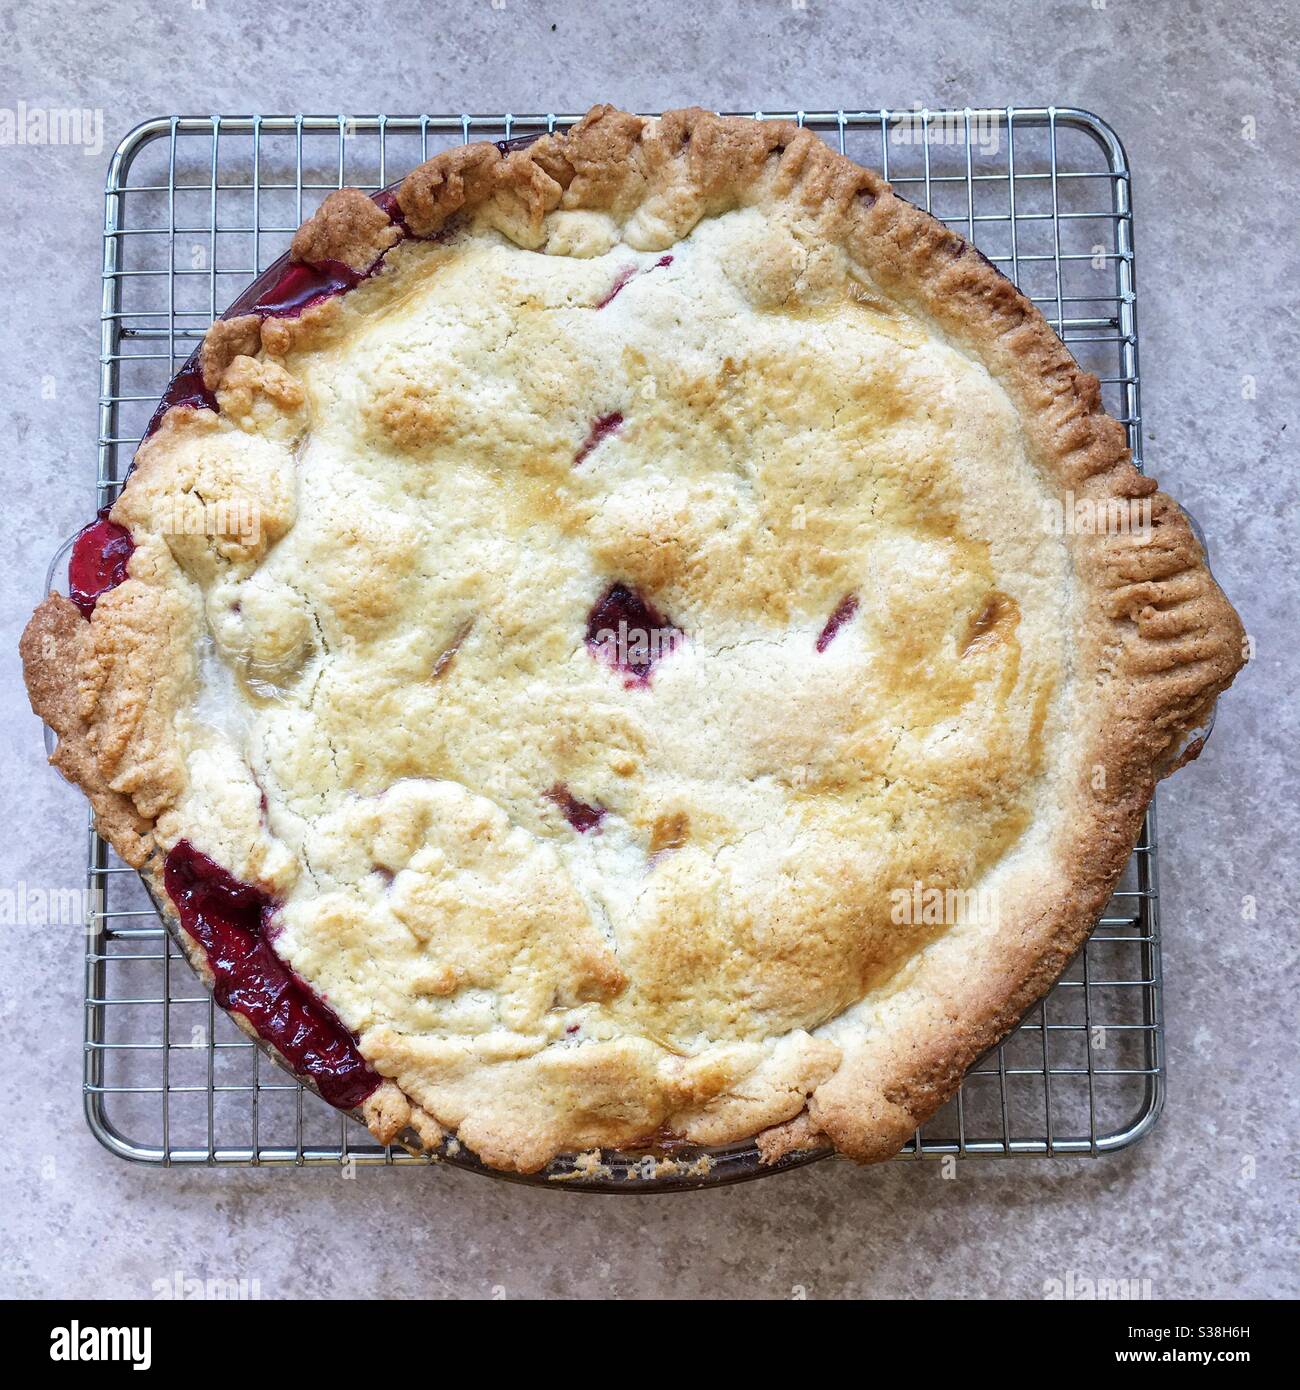 Homemade blackberry and apple pie Stock Photo